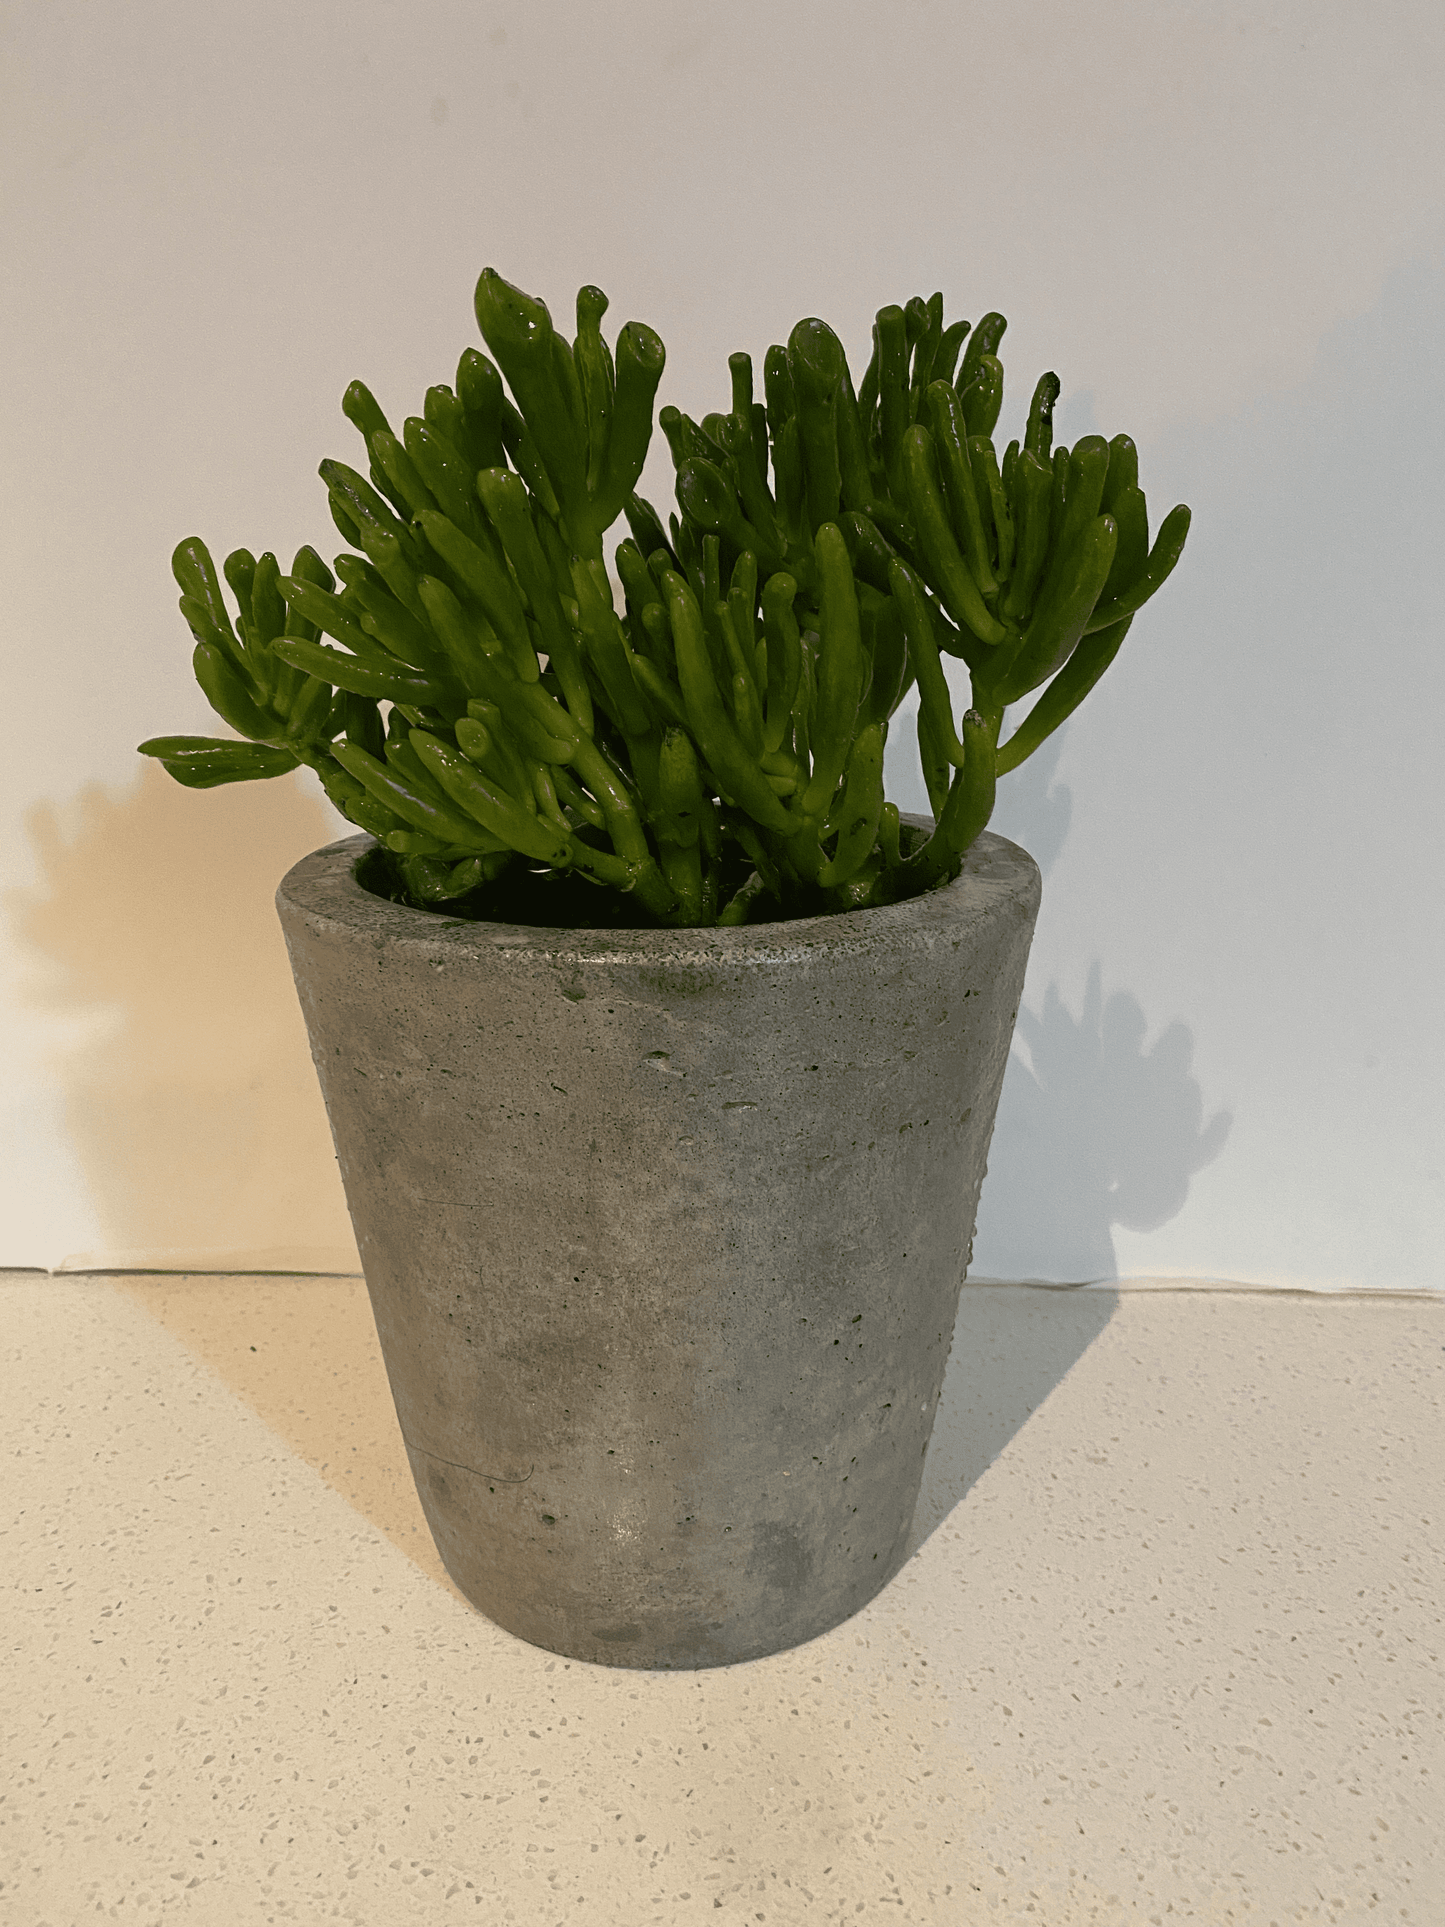 Crassula ovata - hobbit jade plant - Always Greener